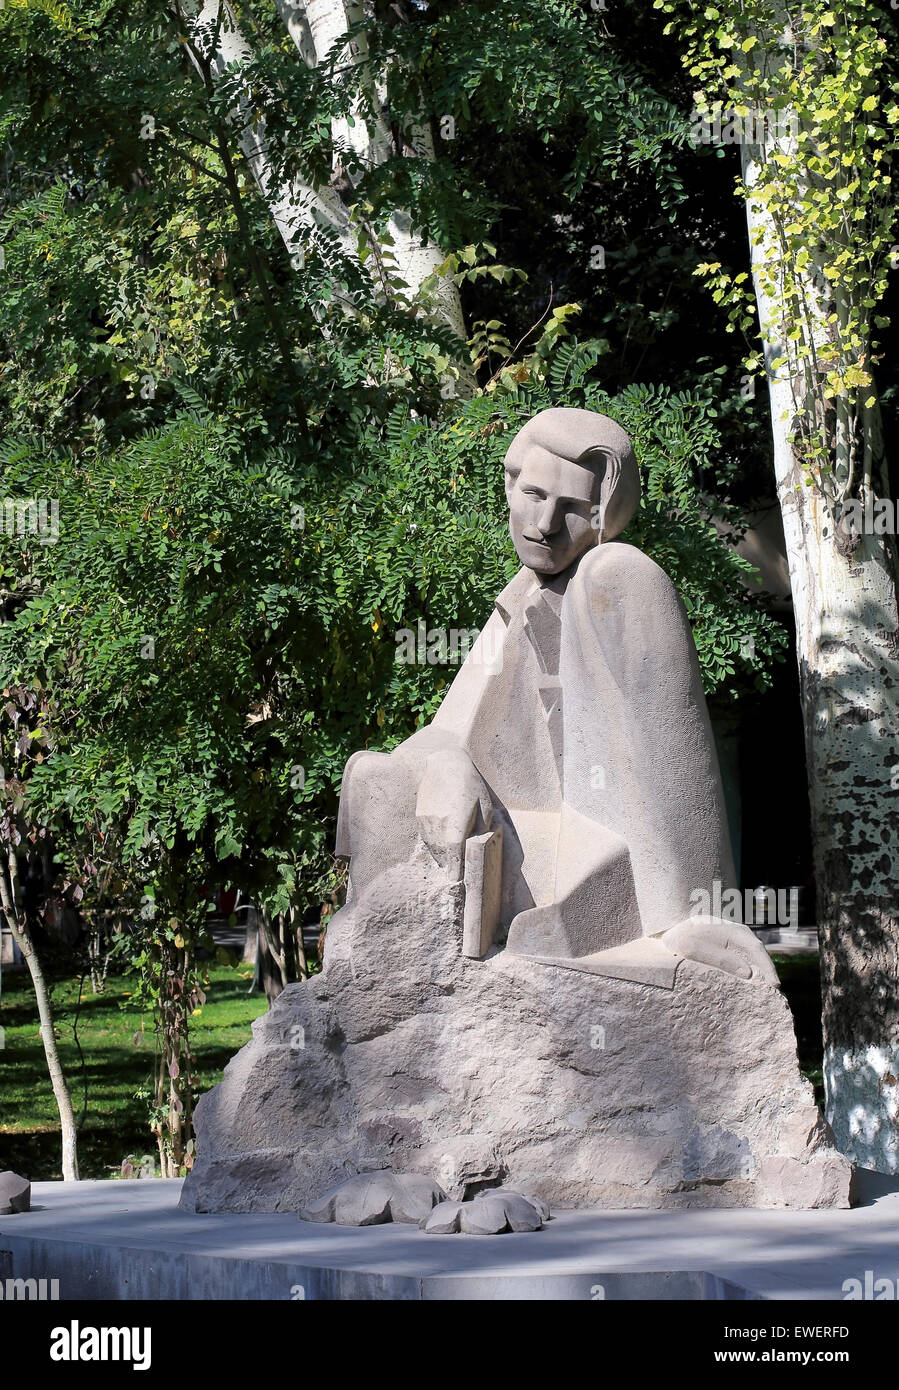 Monumento de granito blanco representando a un hombre sentado Foto de stock